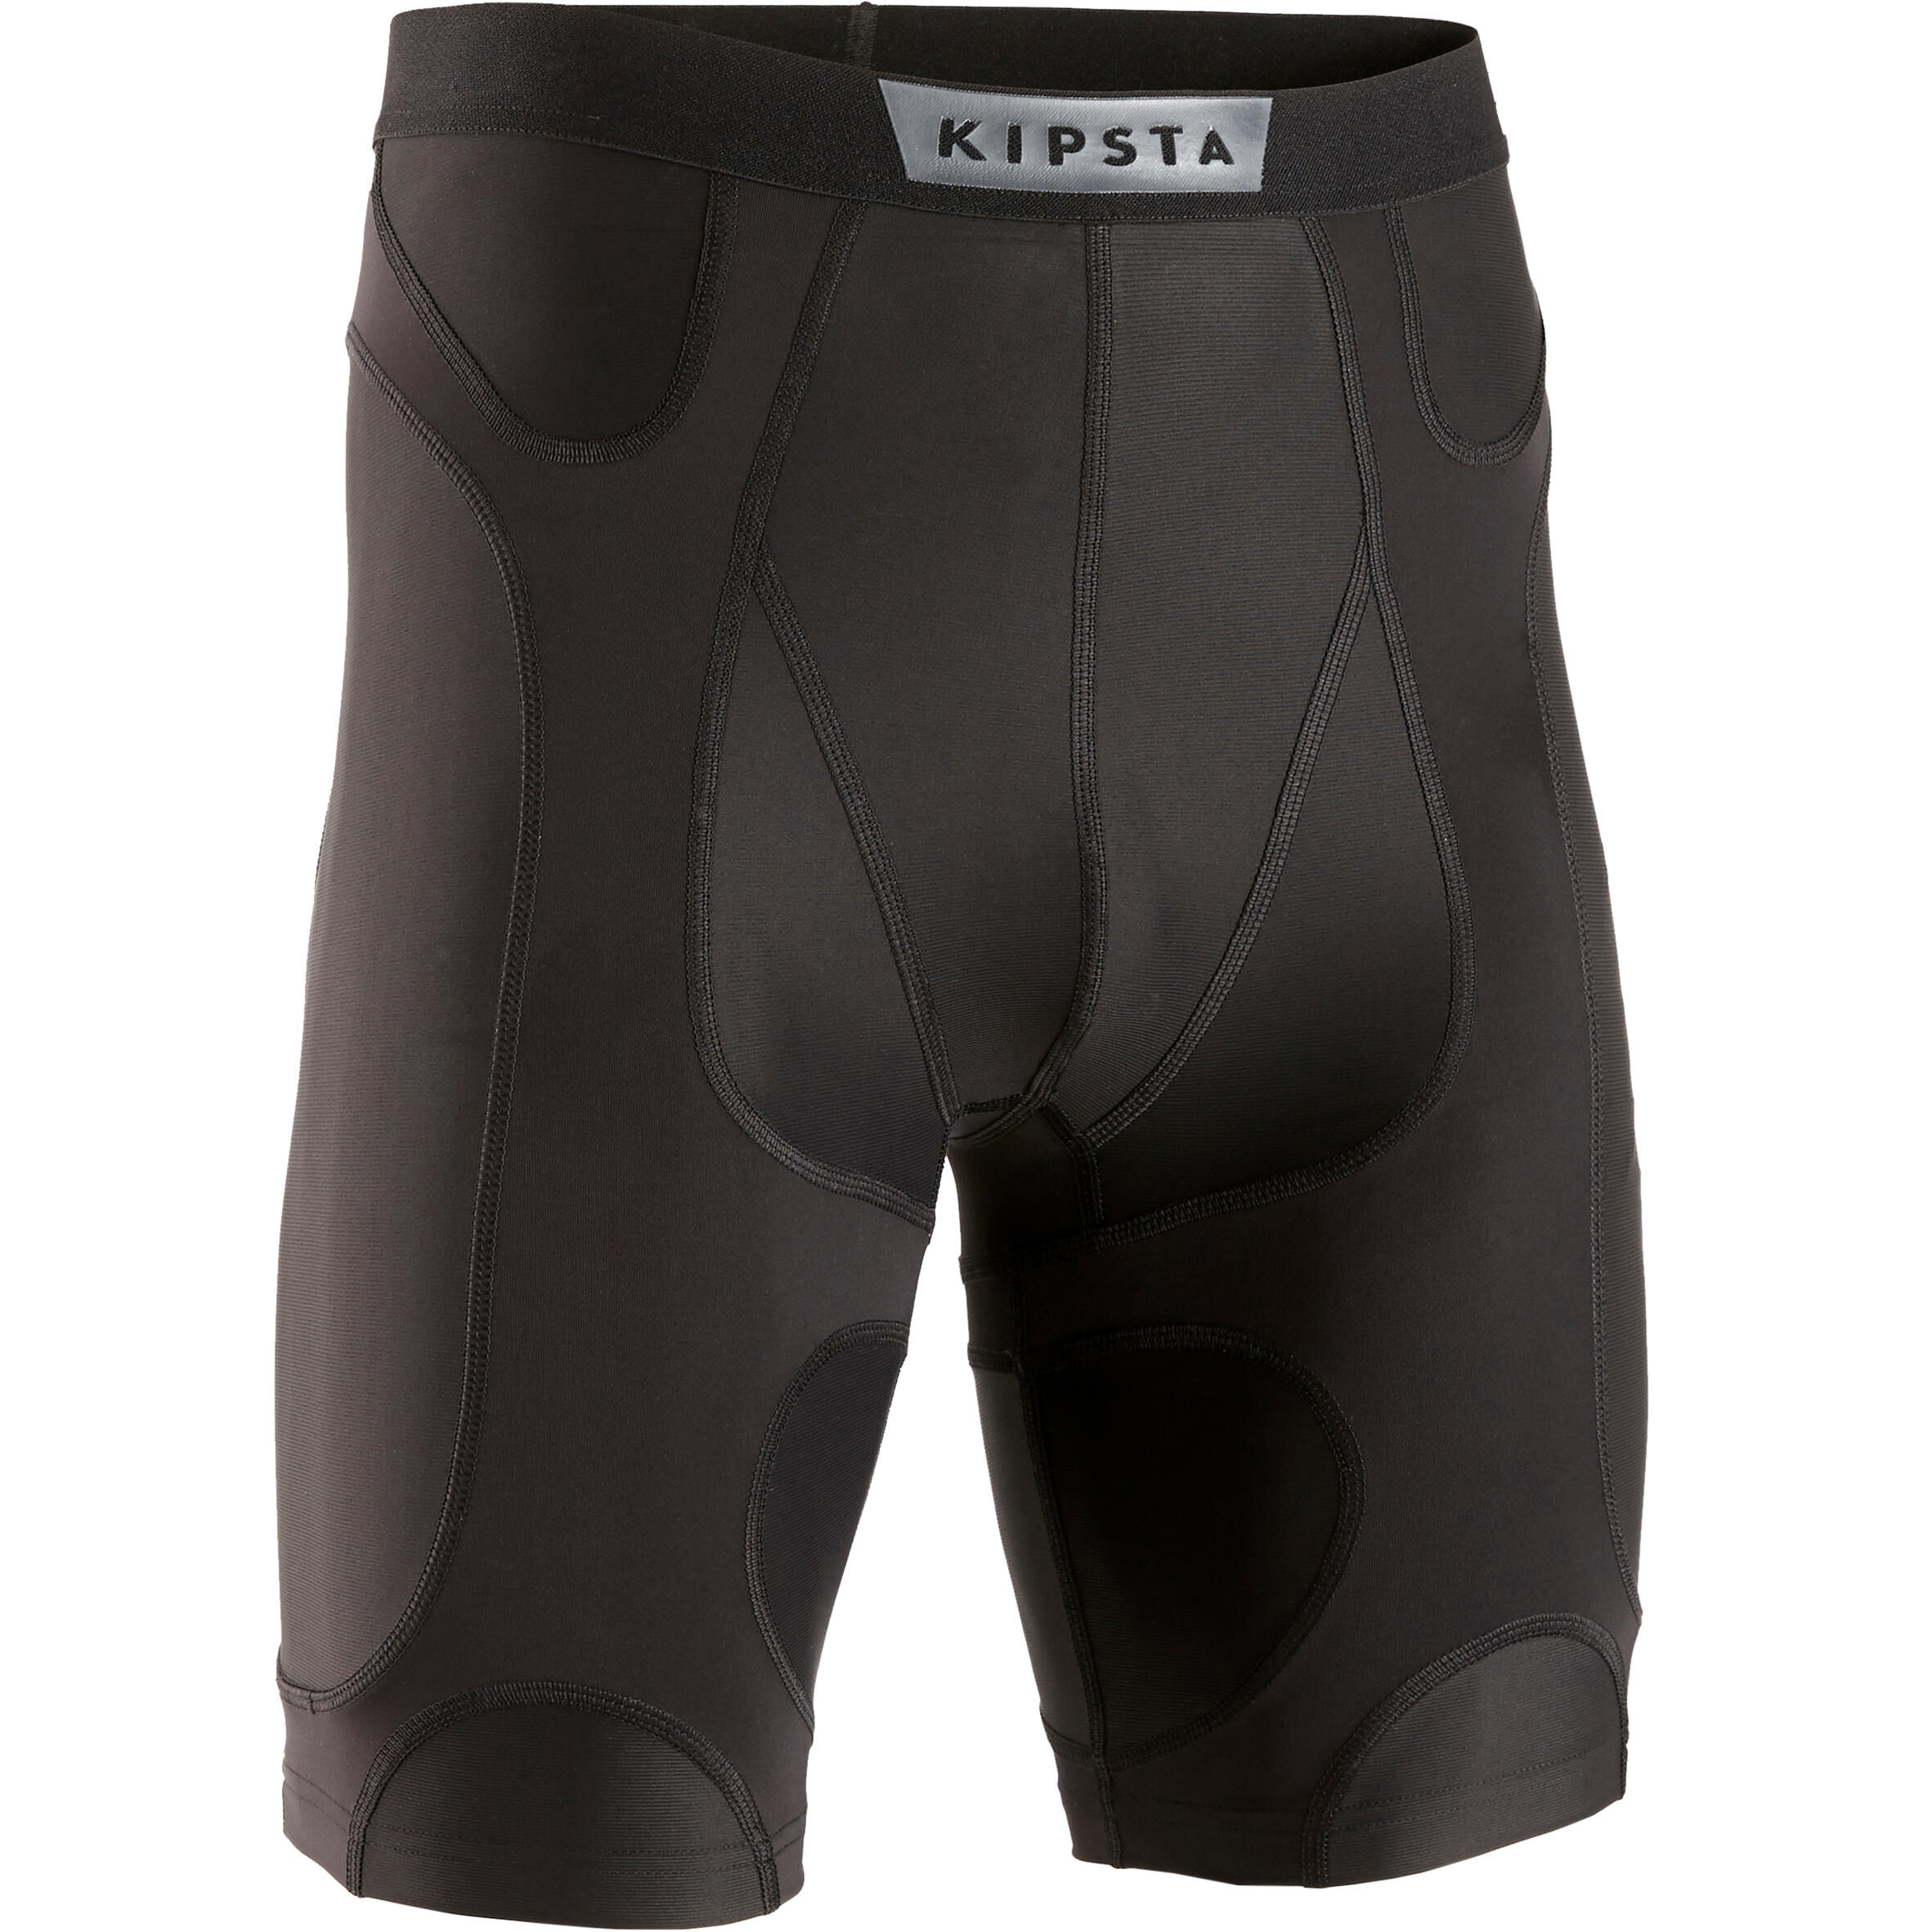 KIPSTA Men's Base Layer Shorts Keepdry 900 Supportiv - Black